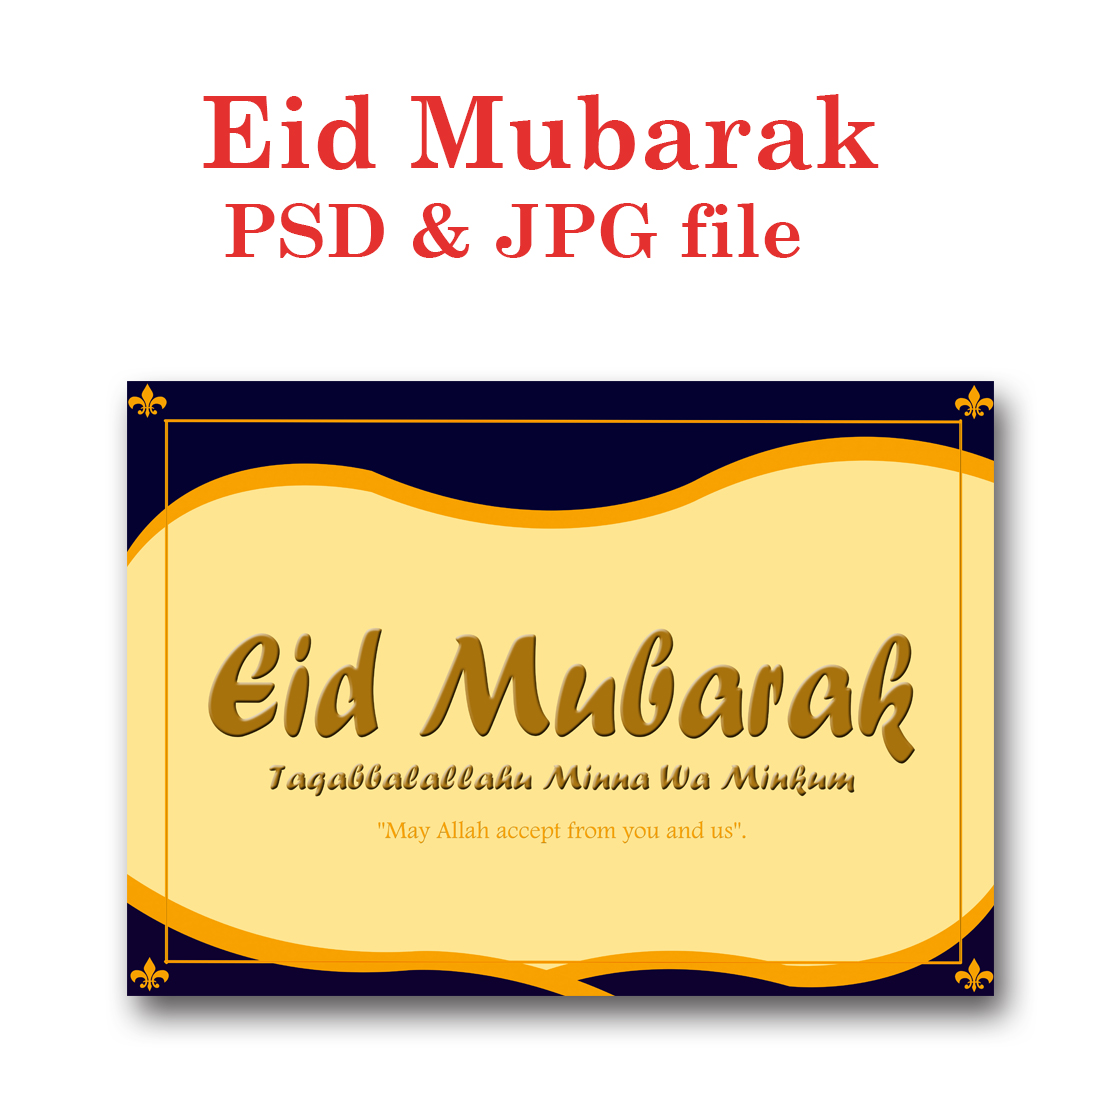 Wishing Eid Mubarak preview image.